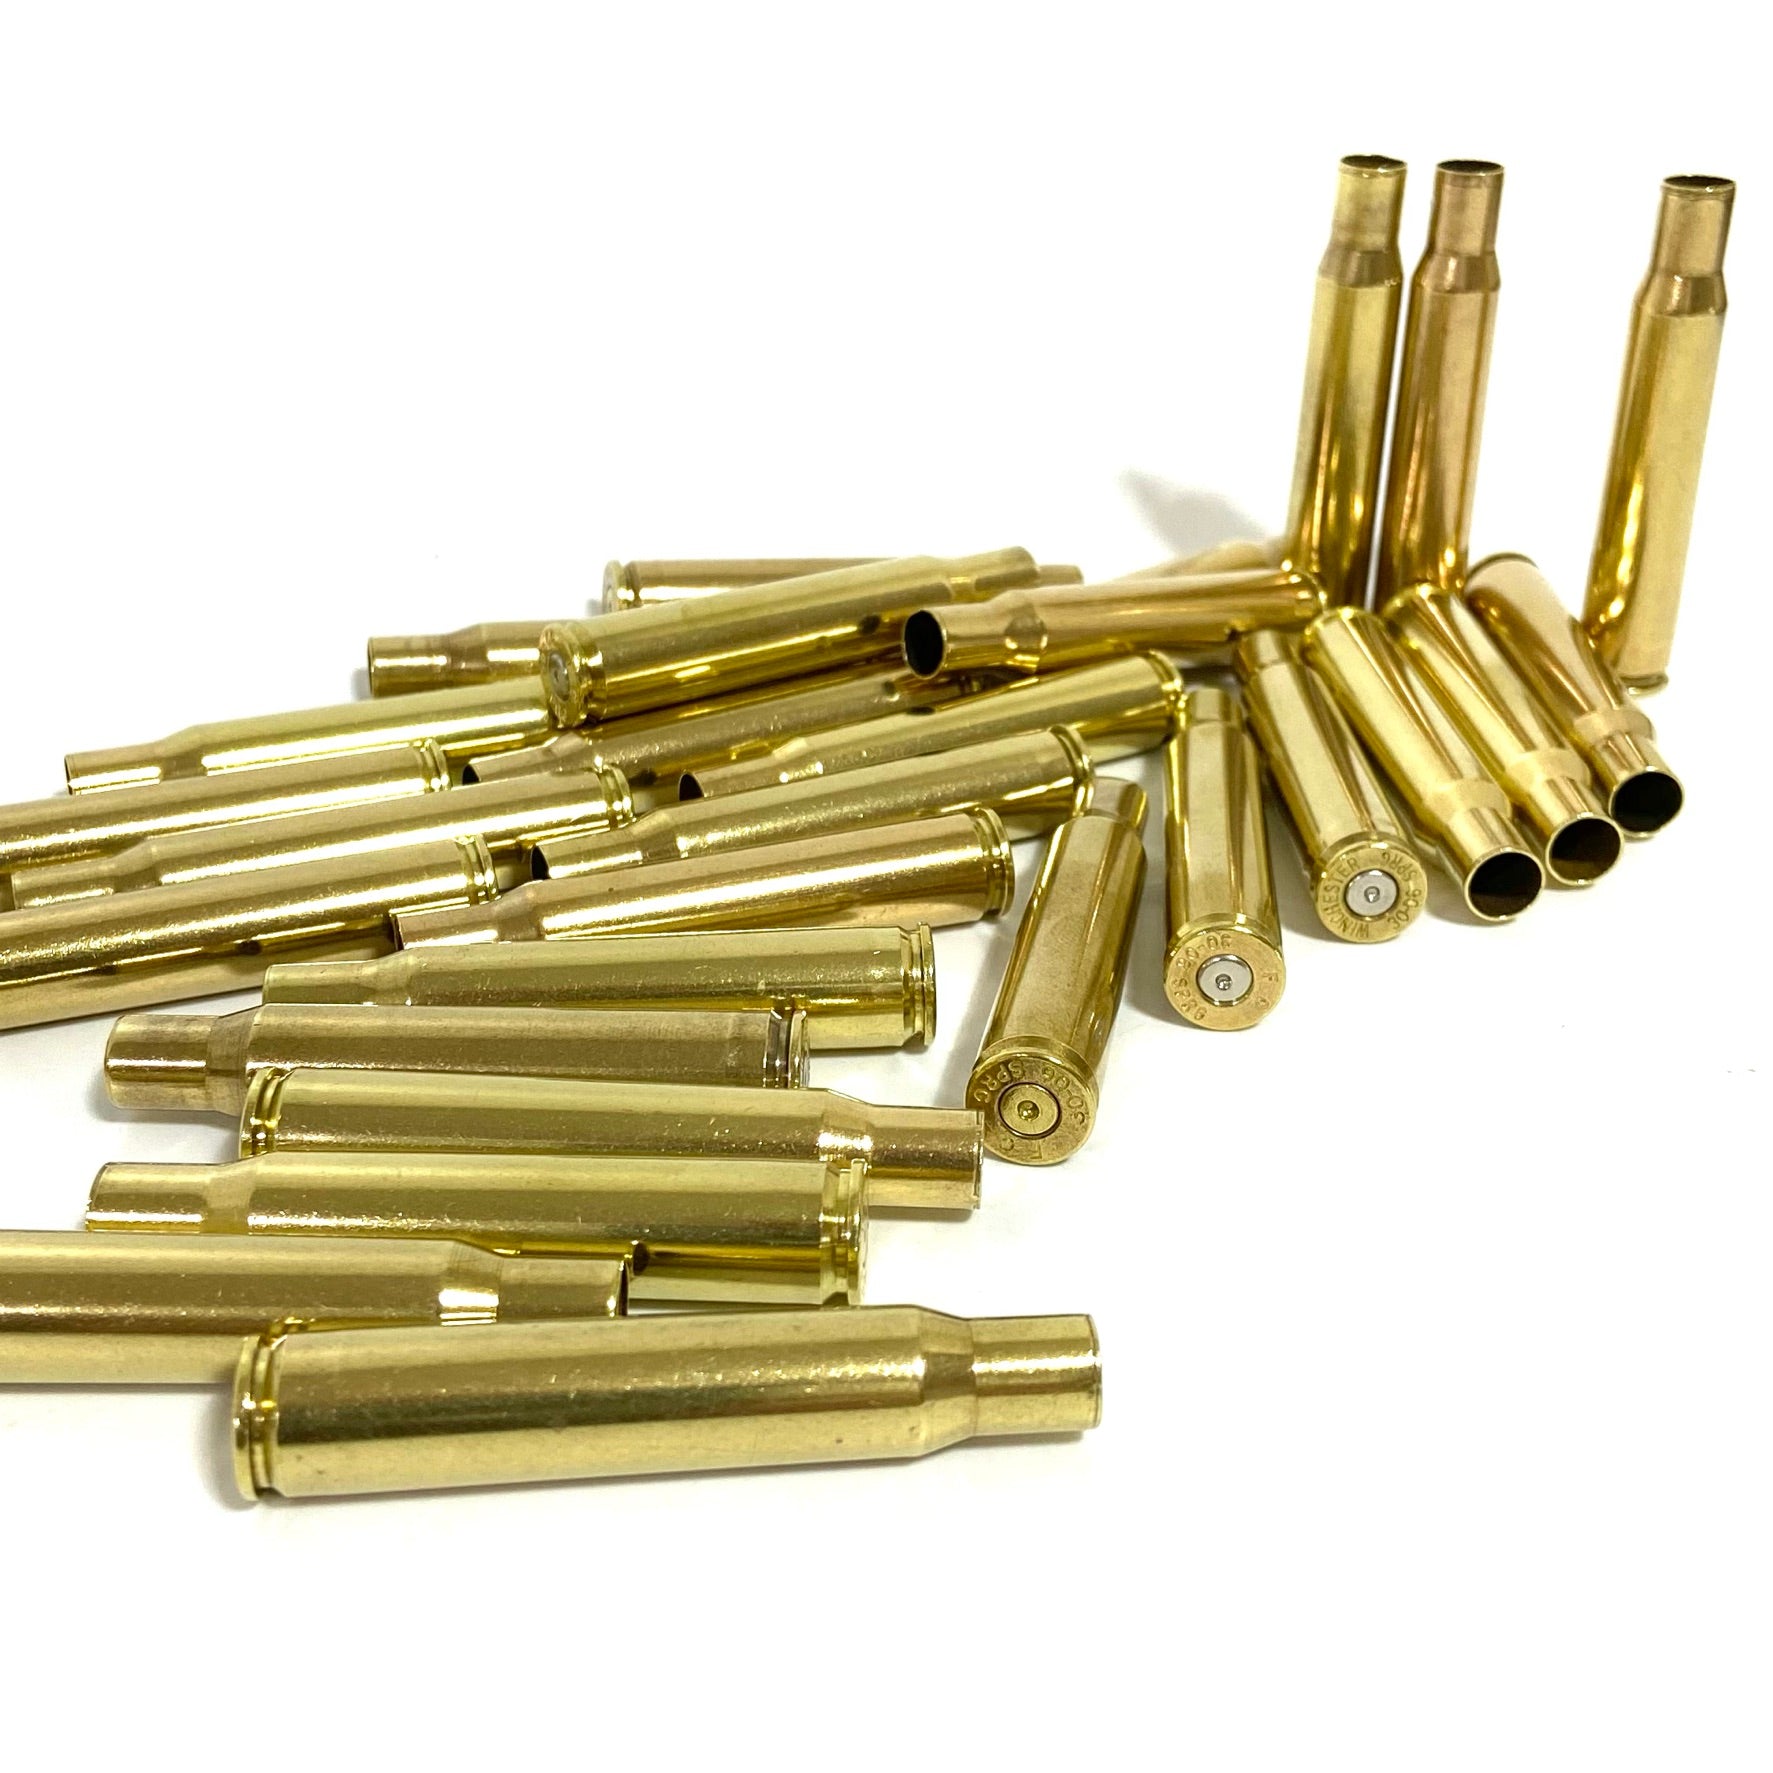 30-06 Brass Bullet Casings, Empty Fired Rifle Shells, Brass